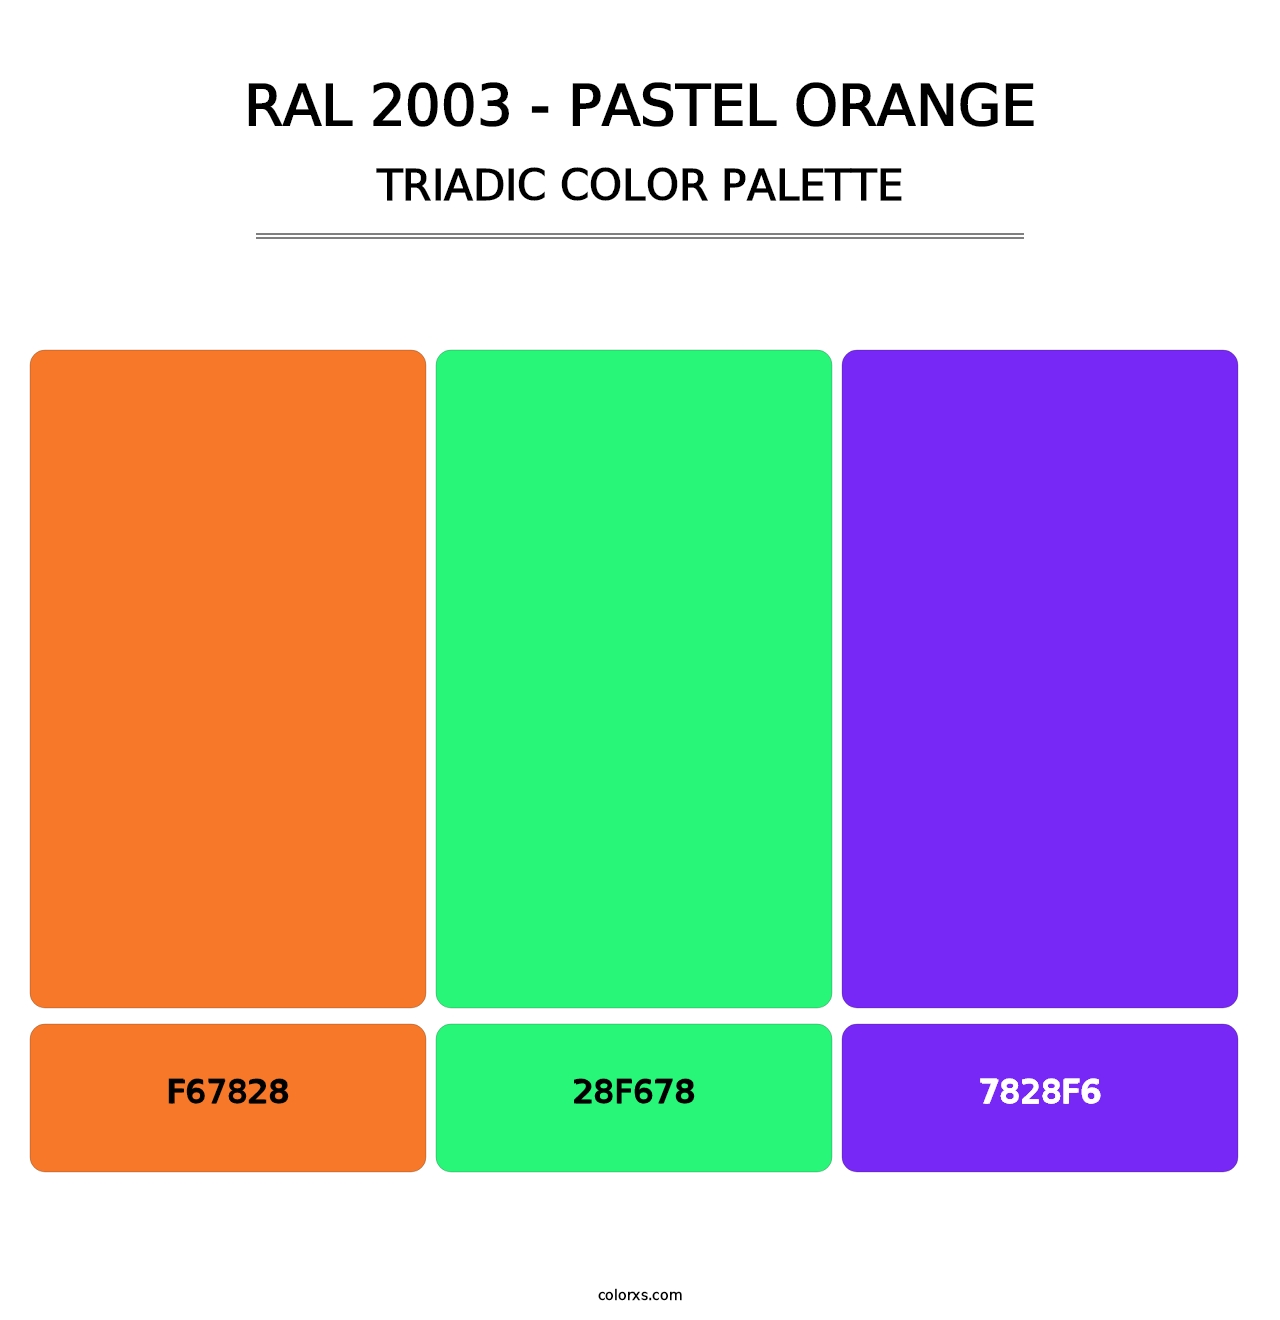 RAL 2003 - Pastel Orange - Triadic Color Palette